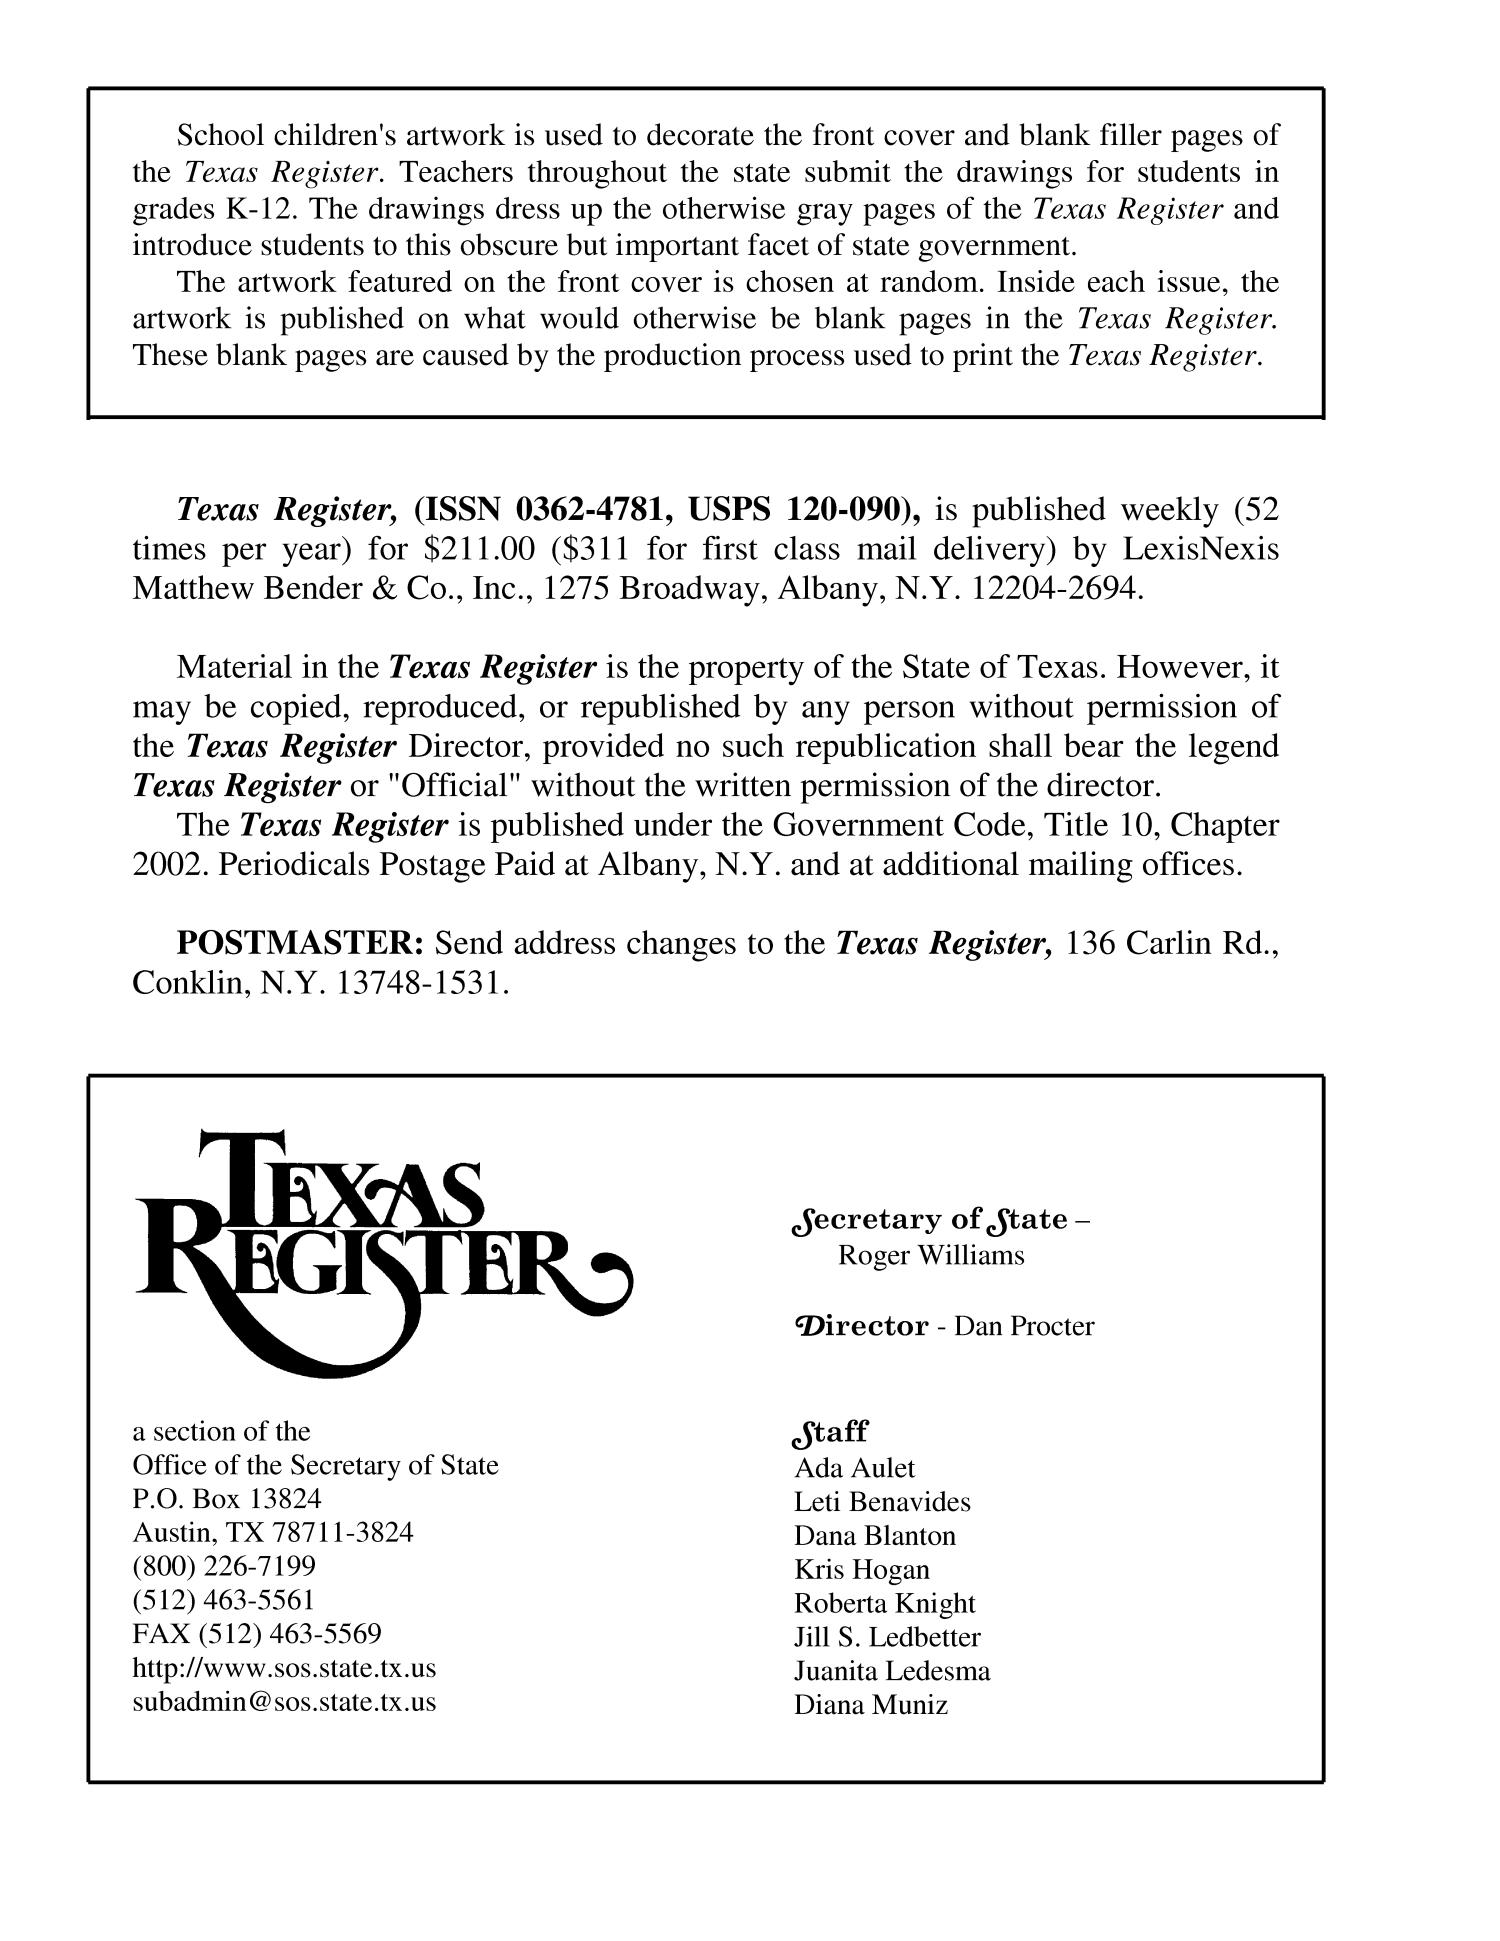 Texas Register, Volume 30, Number 43, Pages 6973-7094, October 28, 2005
                                                
                                                    6974
                                                